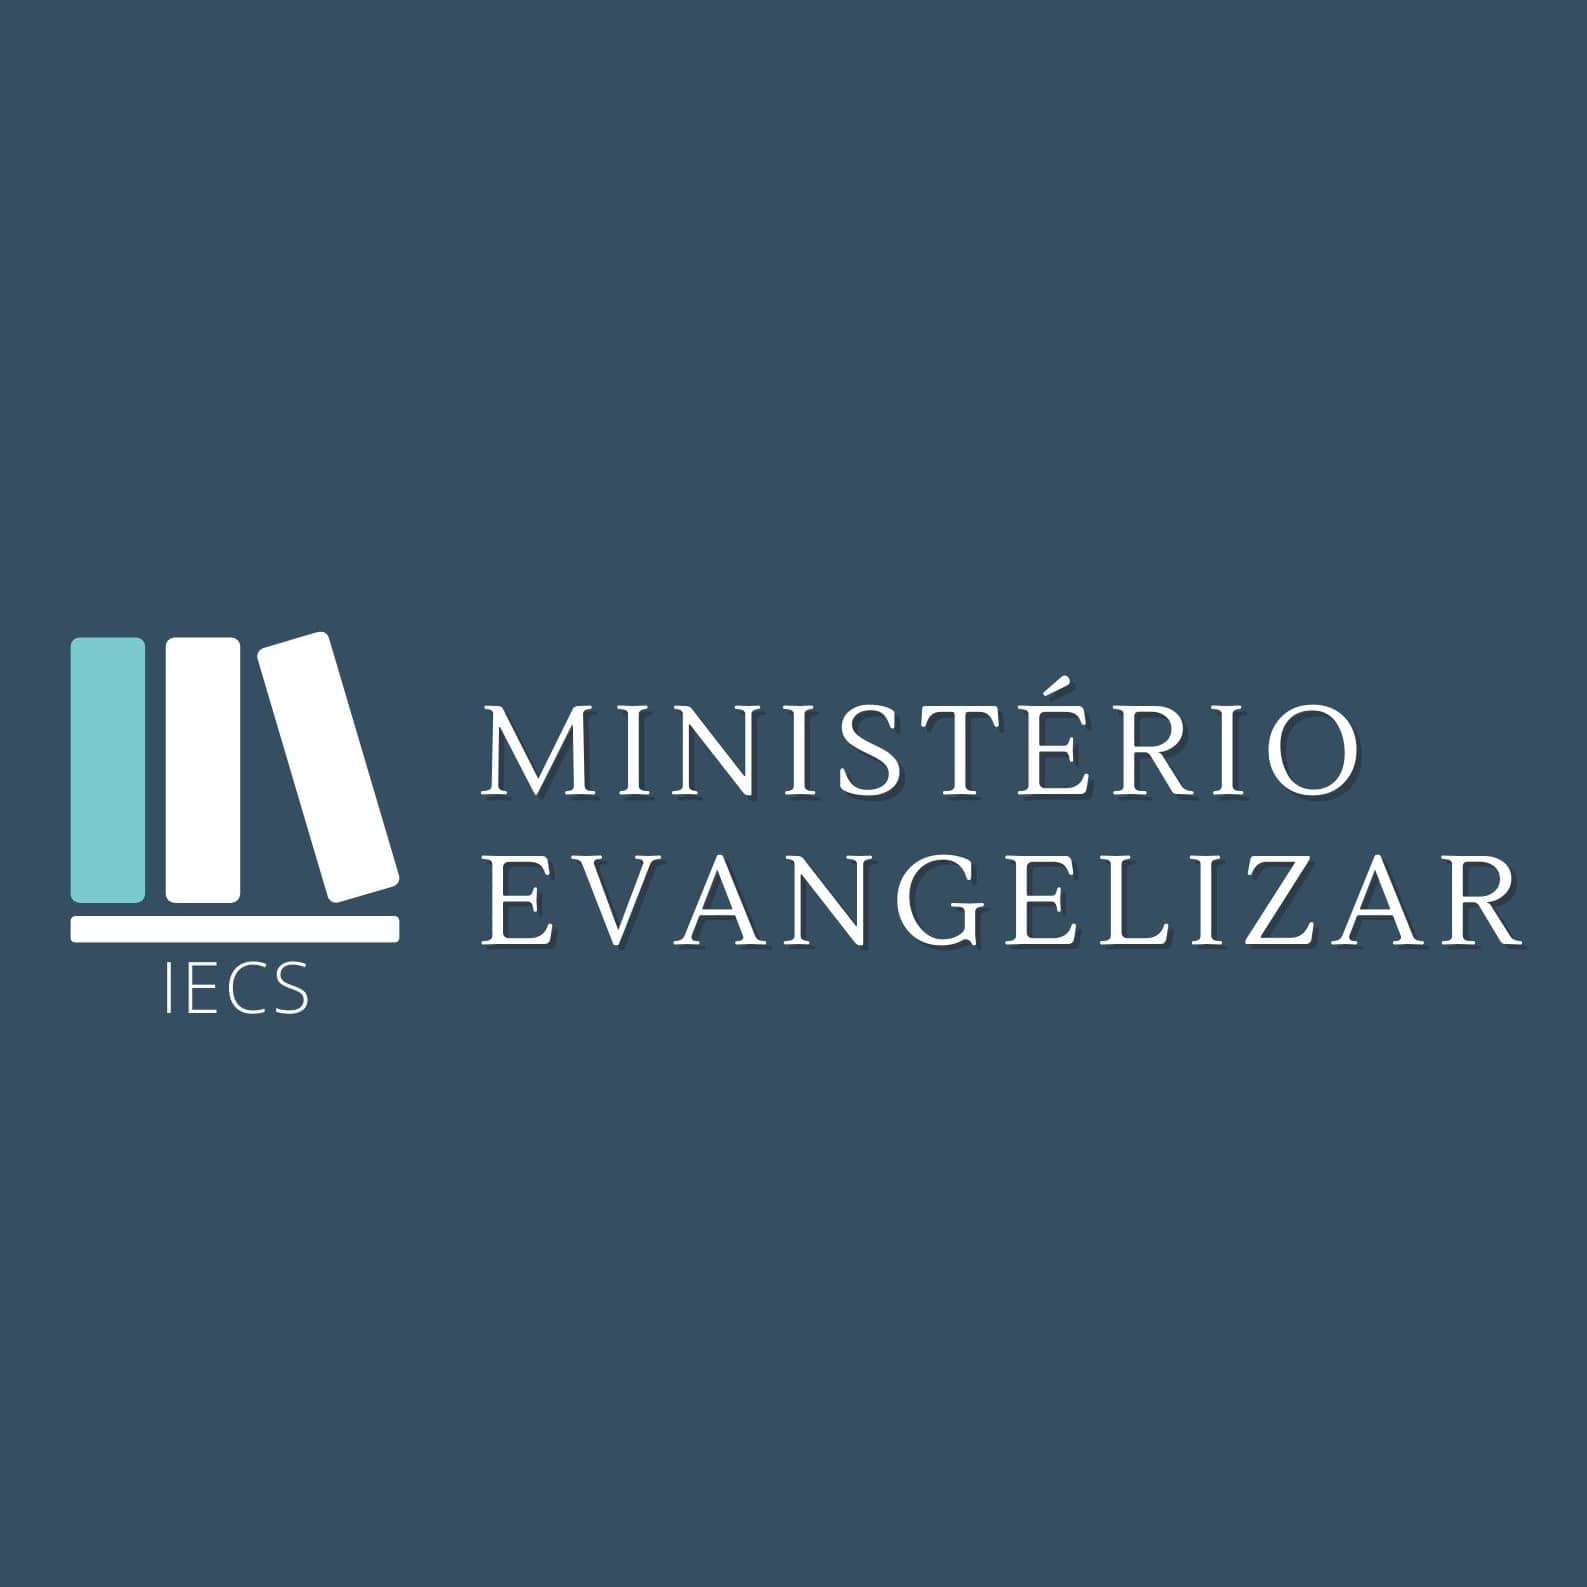 Ministério Evangelizar